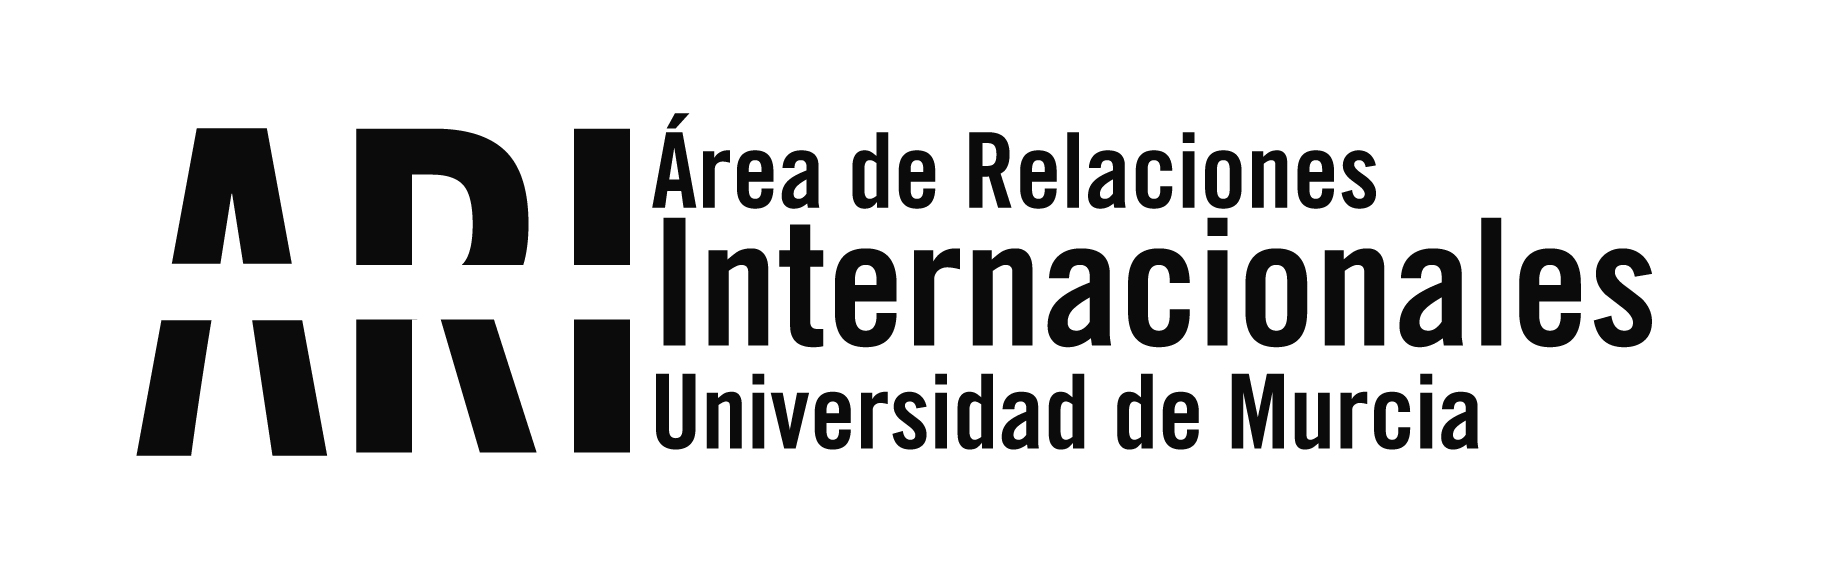 PROJECTS & INTERNATIONAL DEVELOPMENT UNIT - Área de Relaciones Internacionales